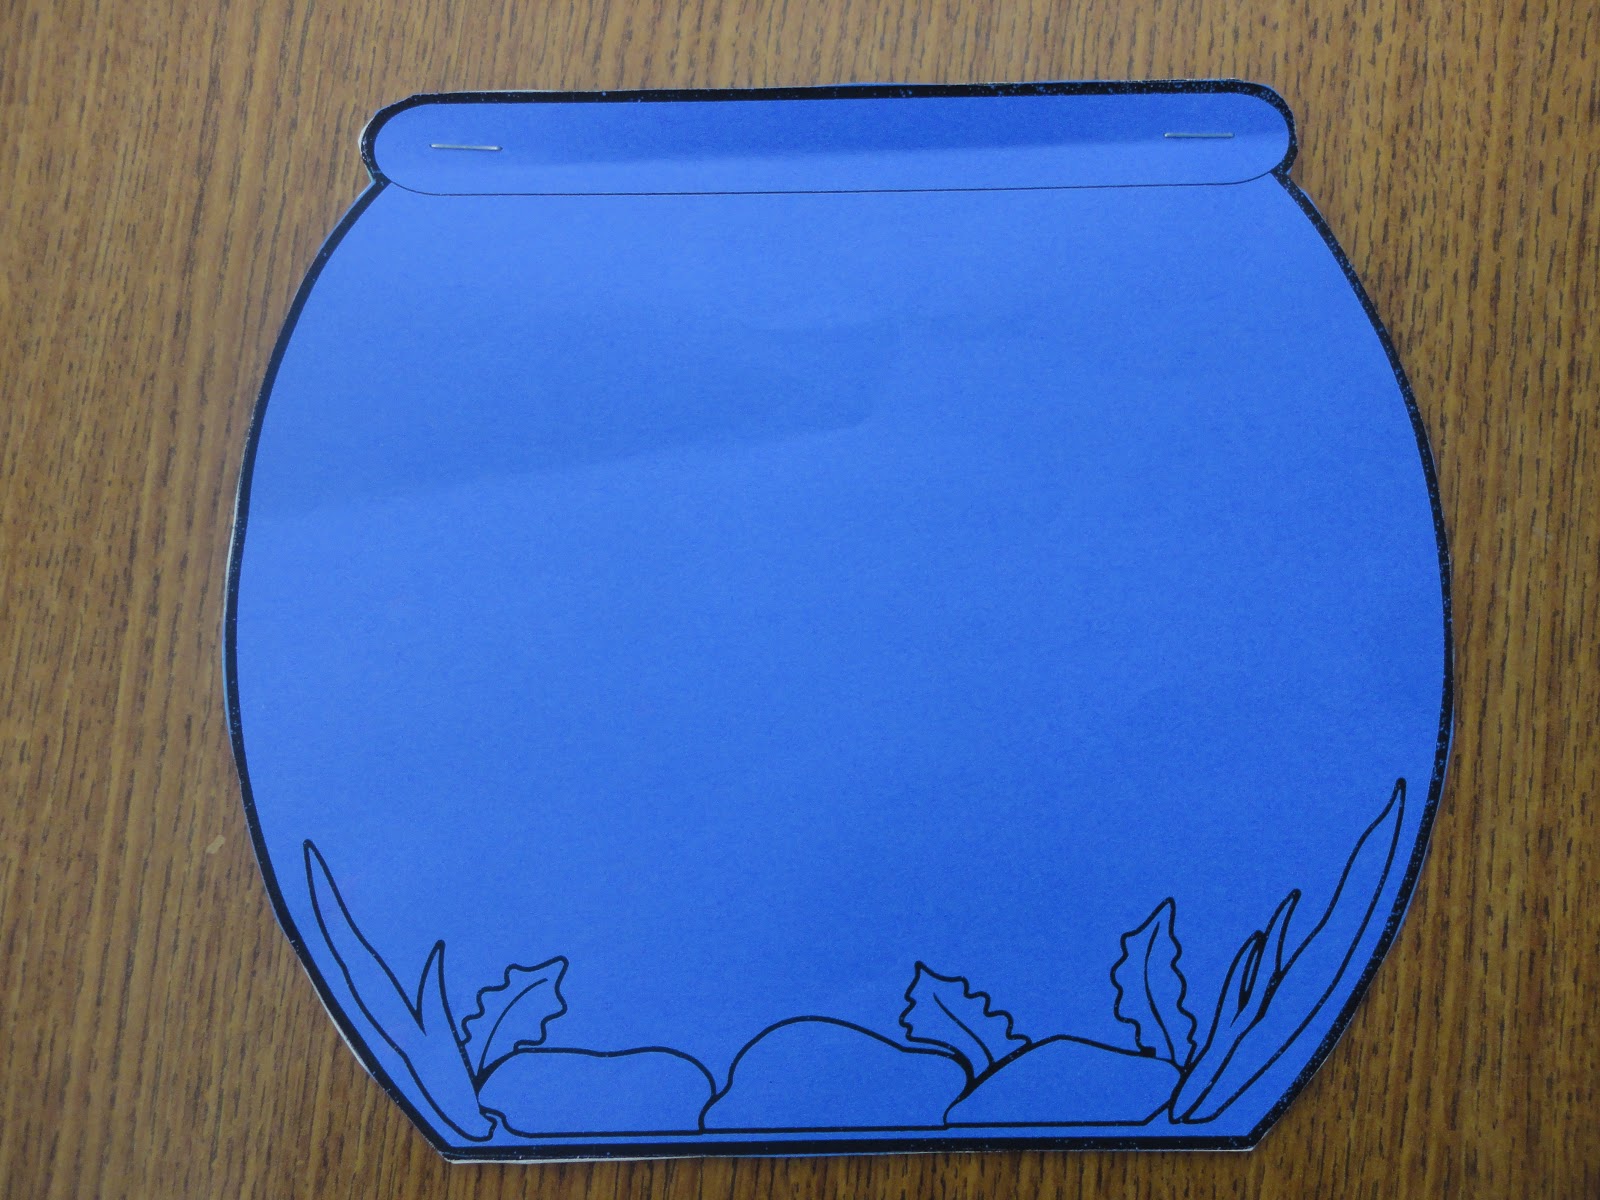 Free Printable Printable Fish Bowl Template / Fish bowl pattern. Use